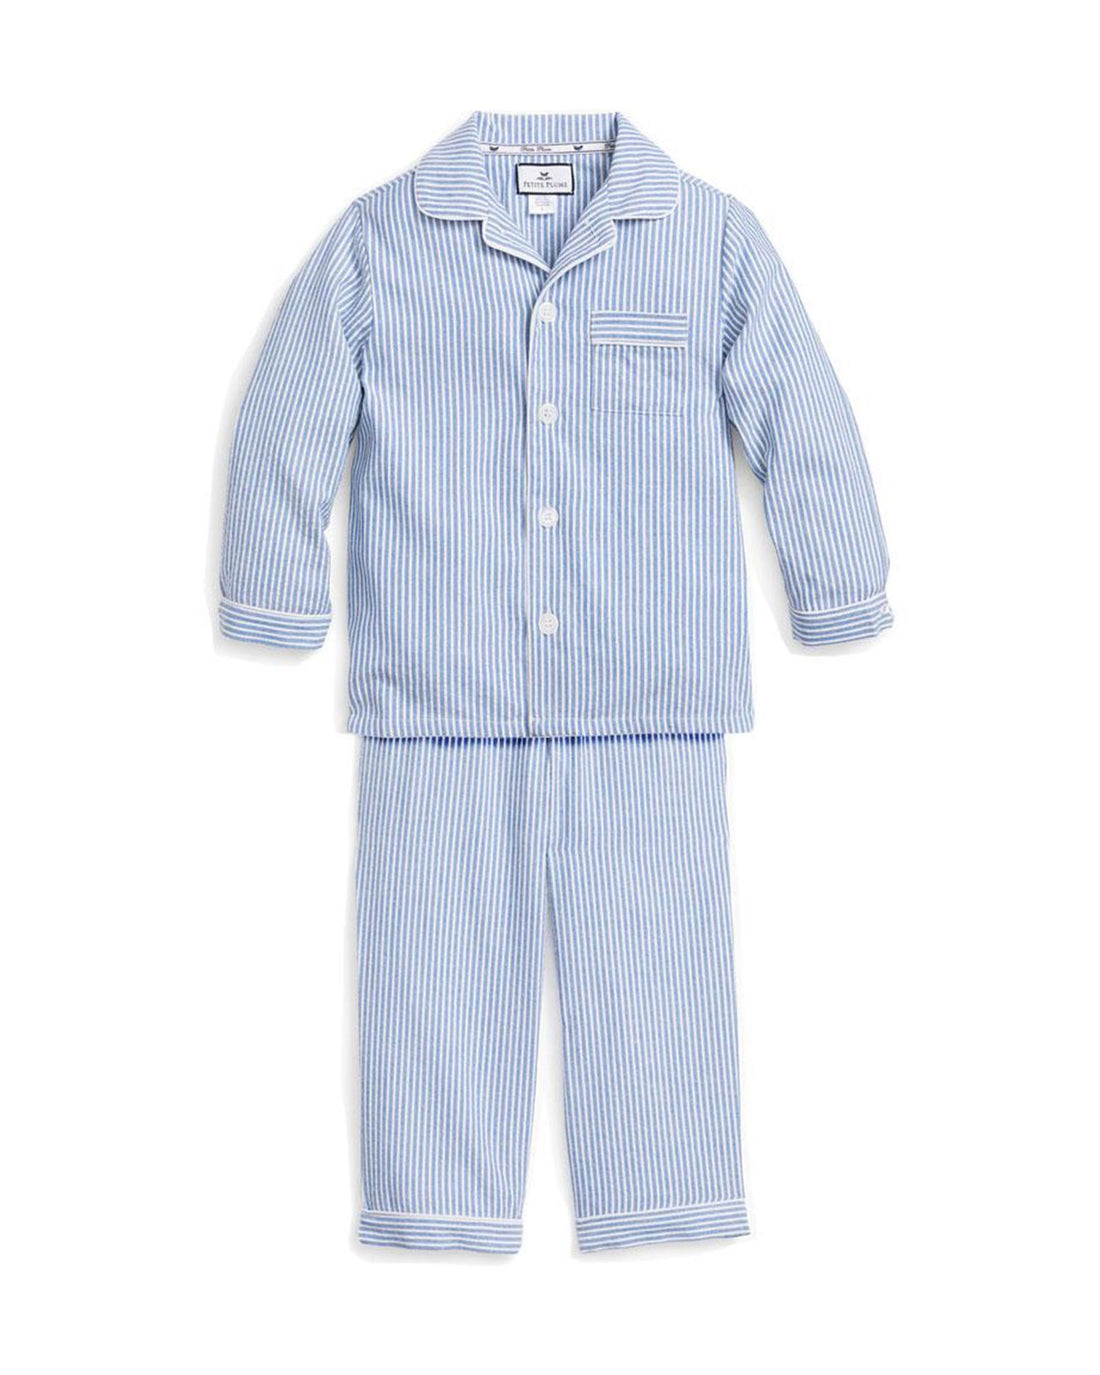 boys french blue seersucker pajama set